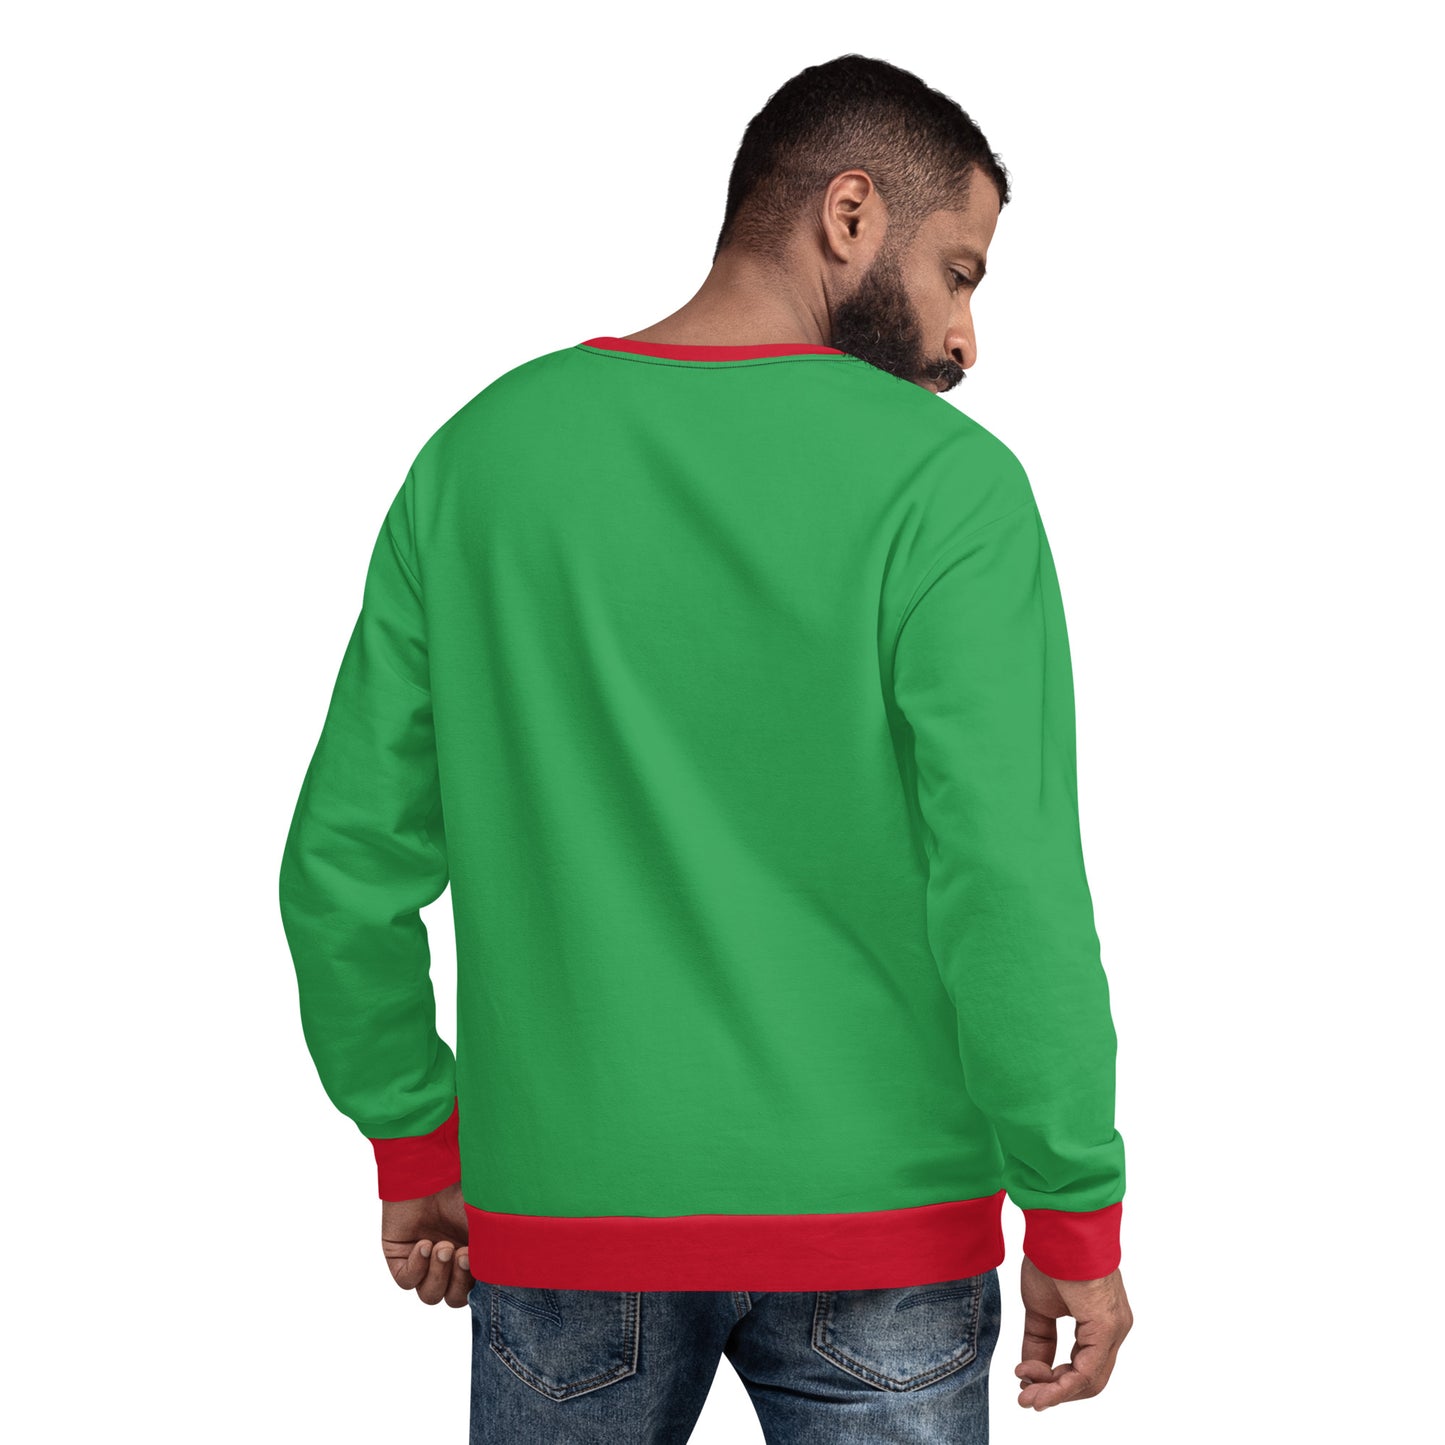 Jamaika-Sweatshirt Jamaika-Kleidung Farben Jamaika-Flagge , 55% OFF